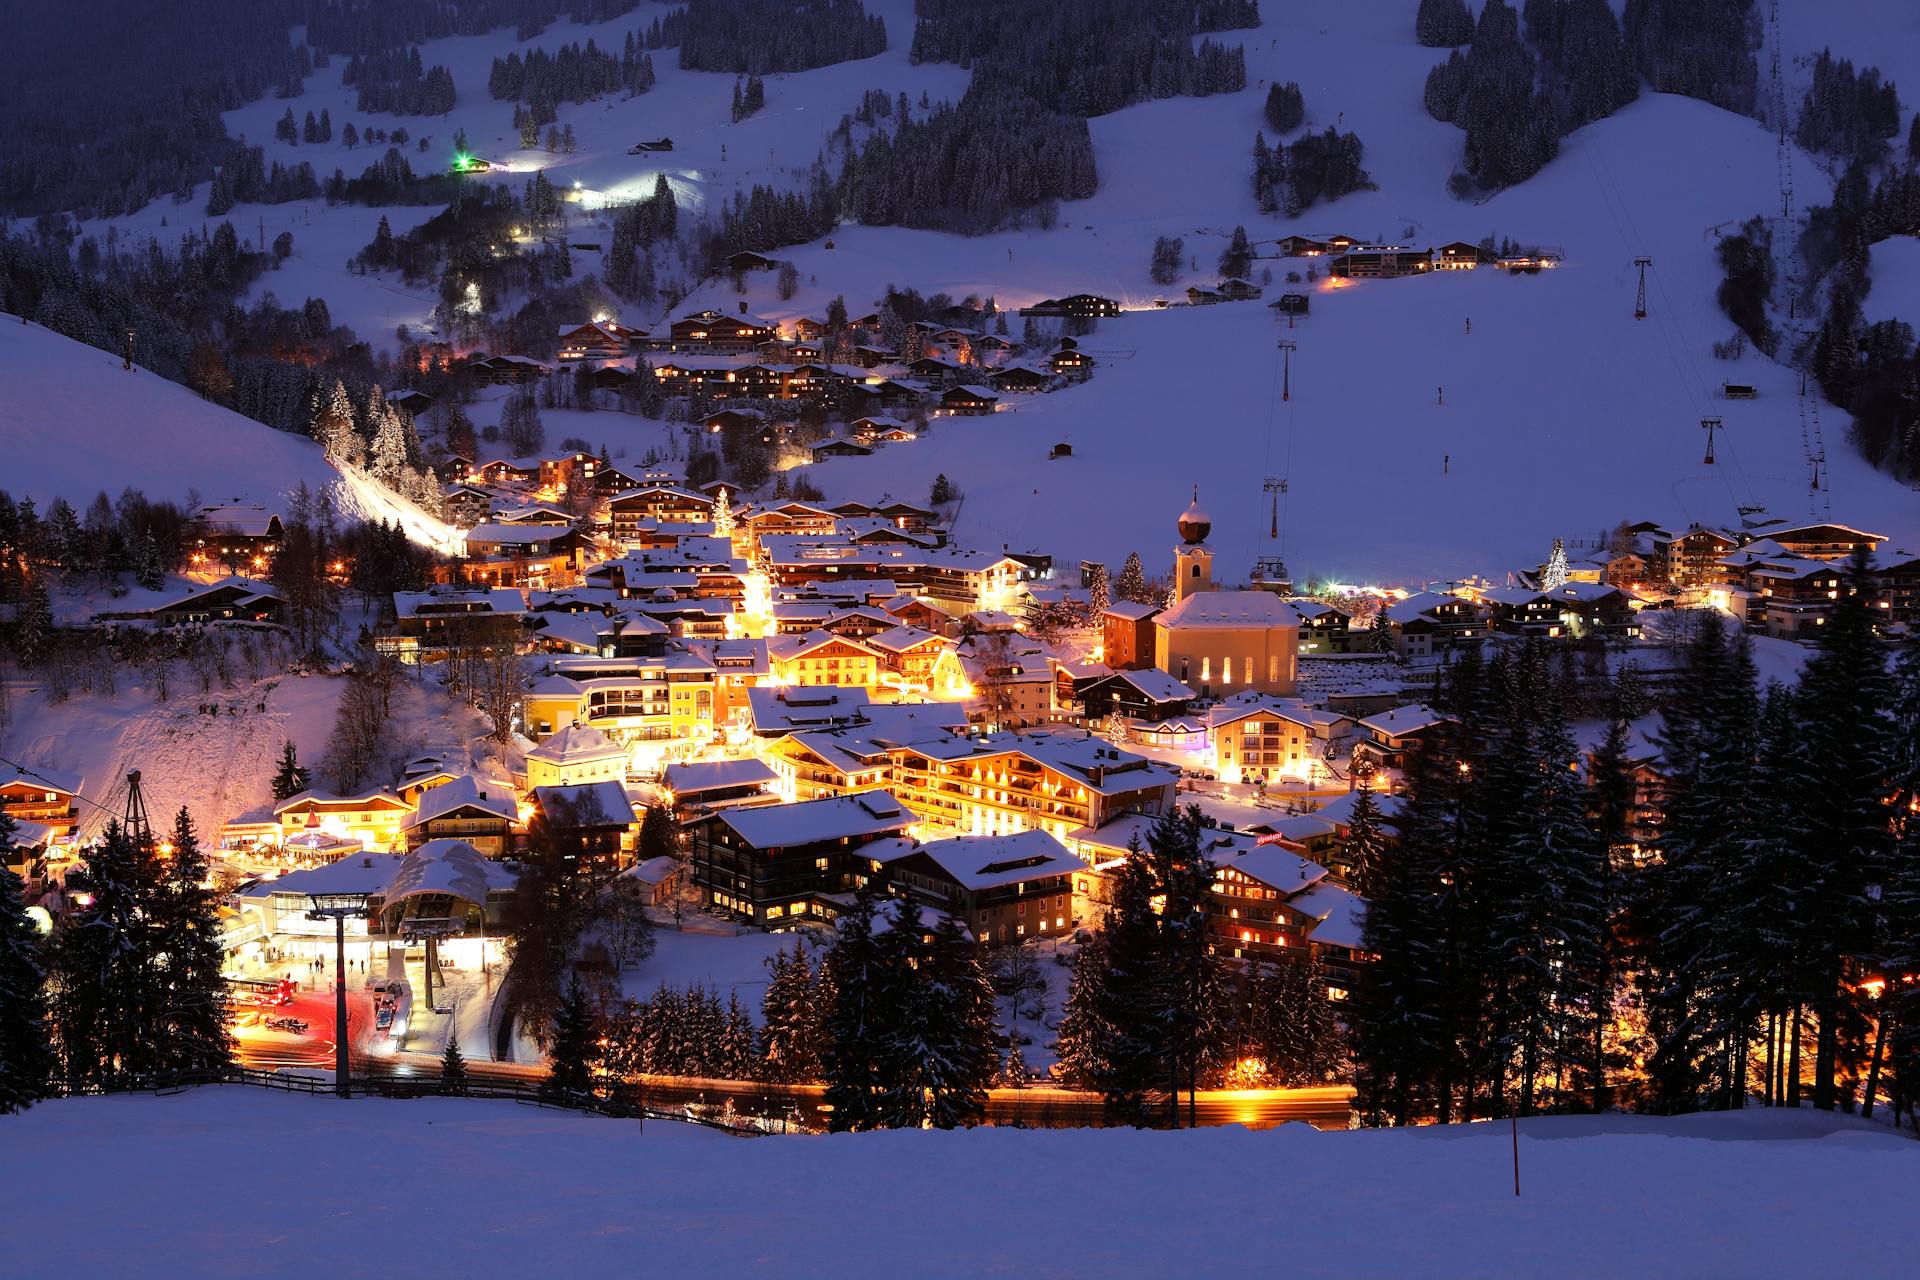 St-Johann-In-Tirol lit up at night before apres ski